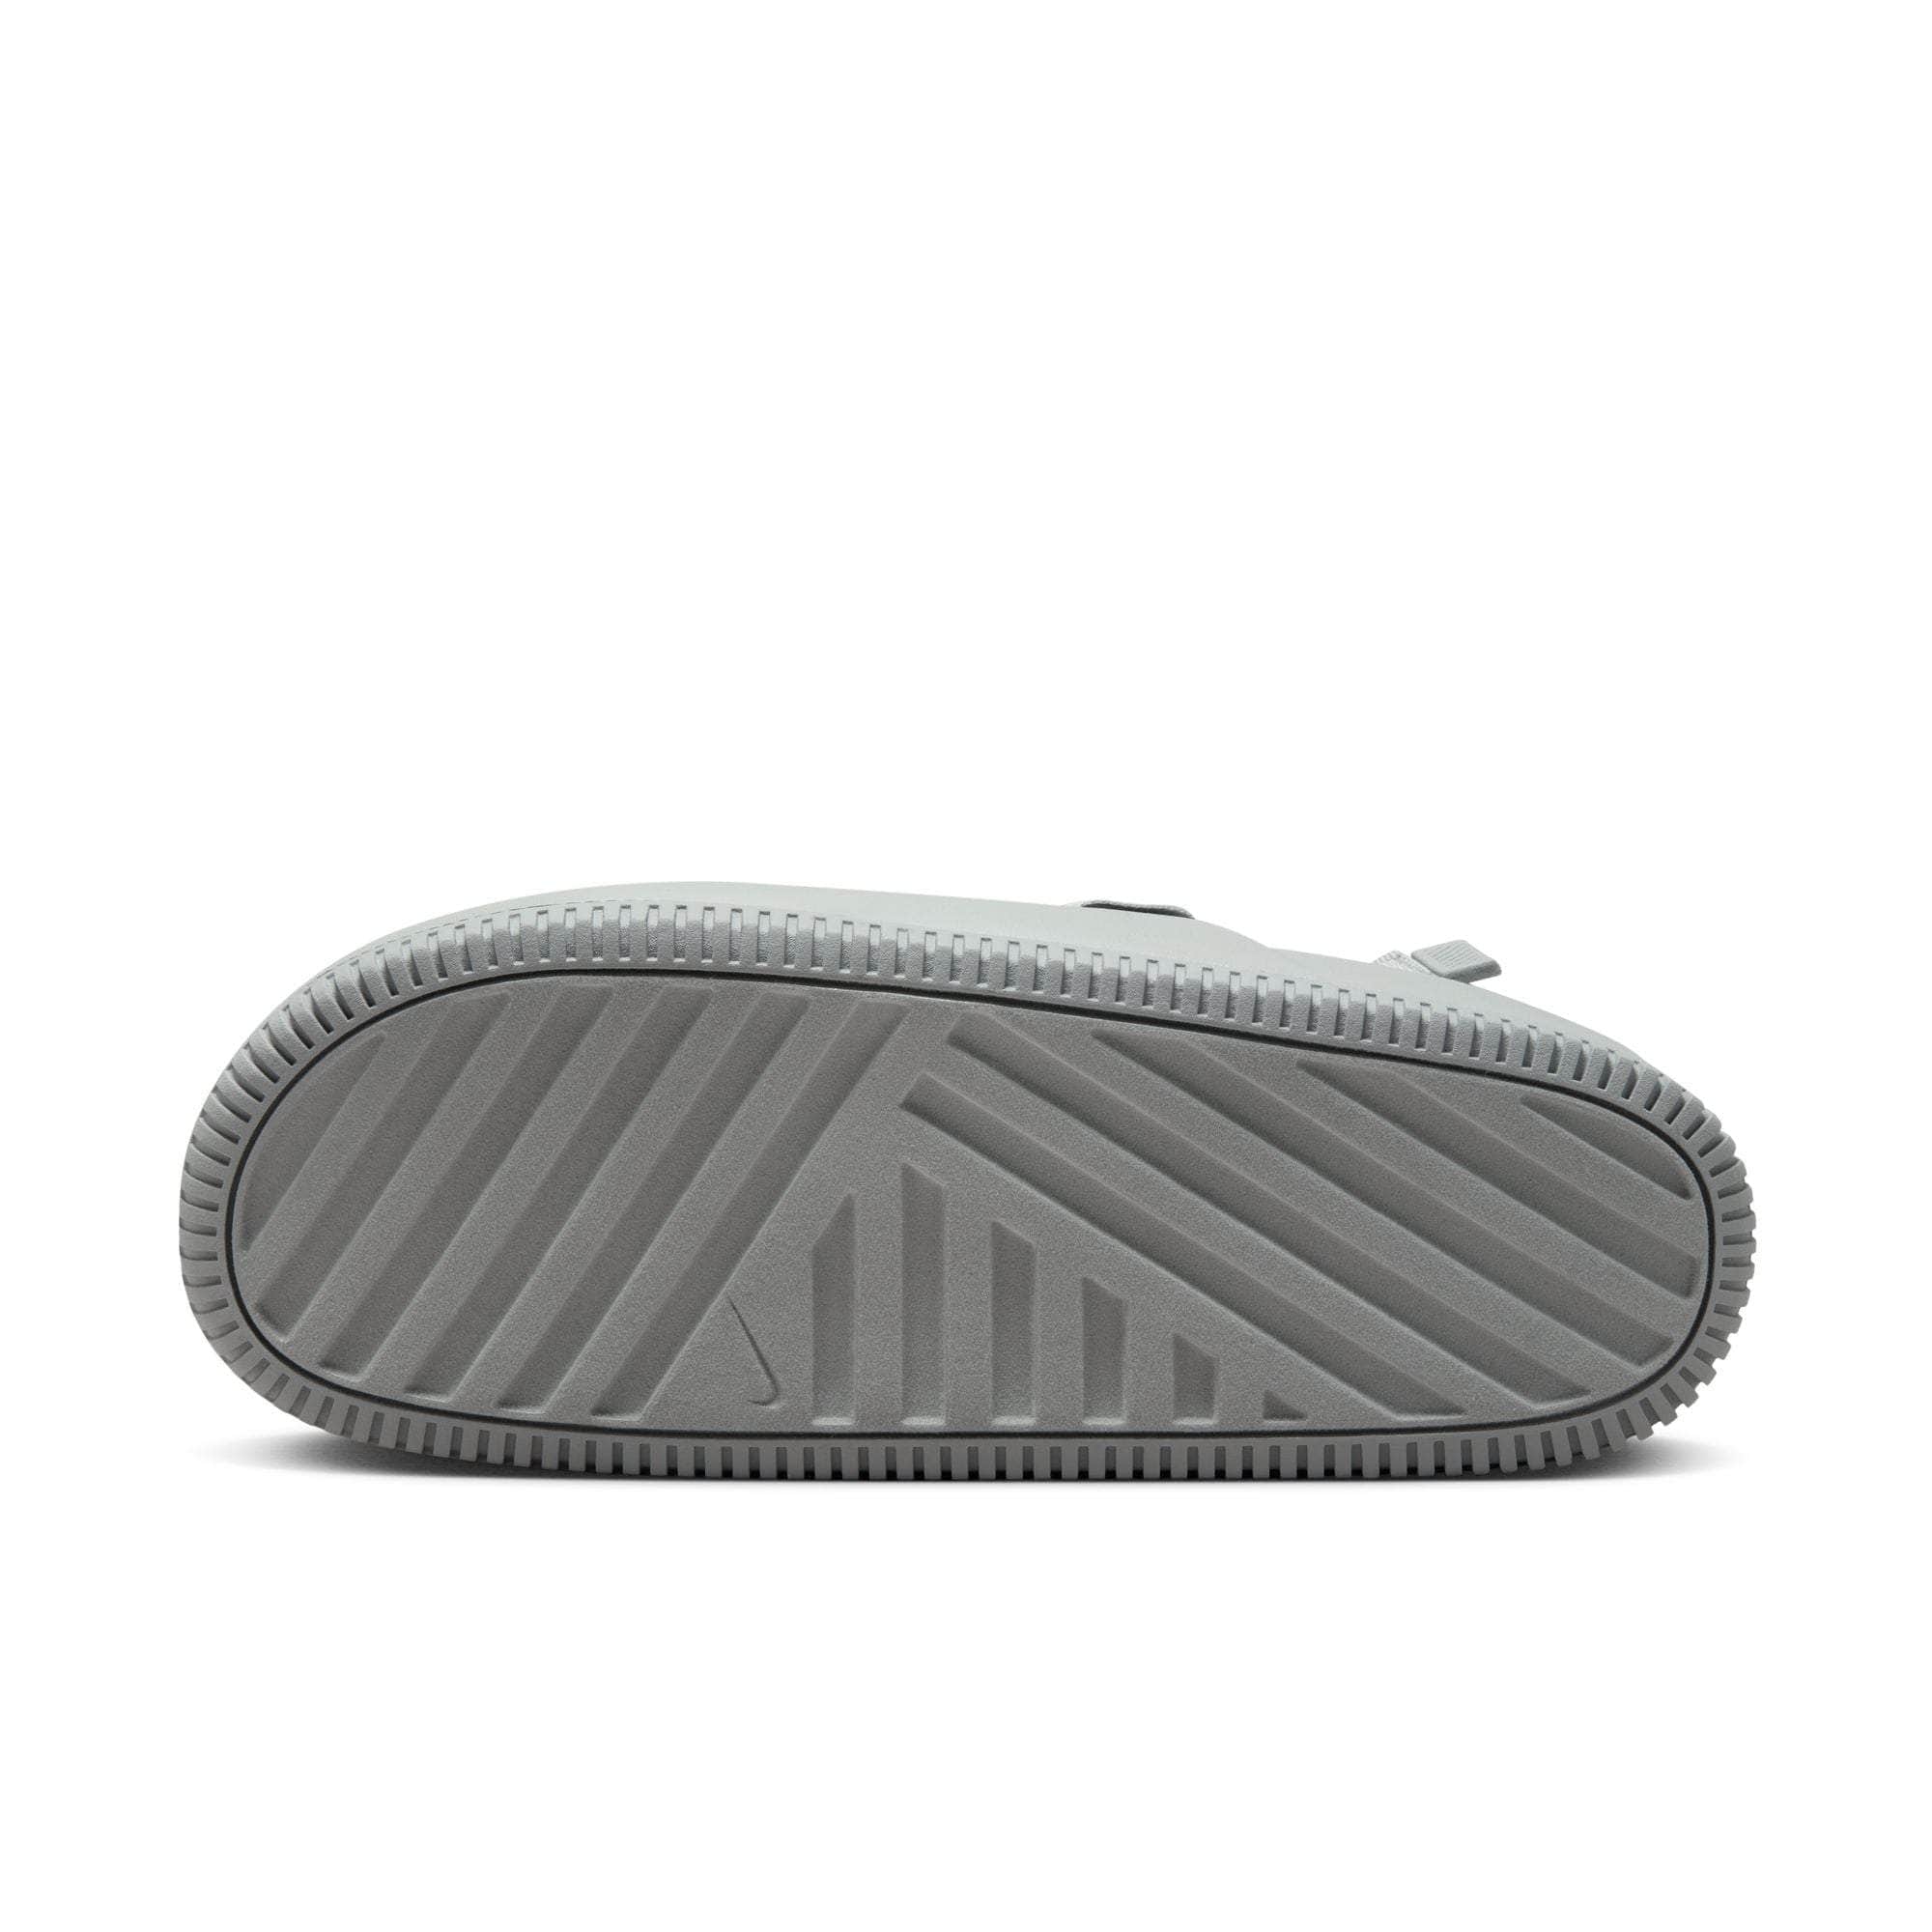 Nike FOOTWEAR Nike Calm Mule "Light Smoke Grey" - Men's